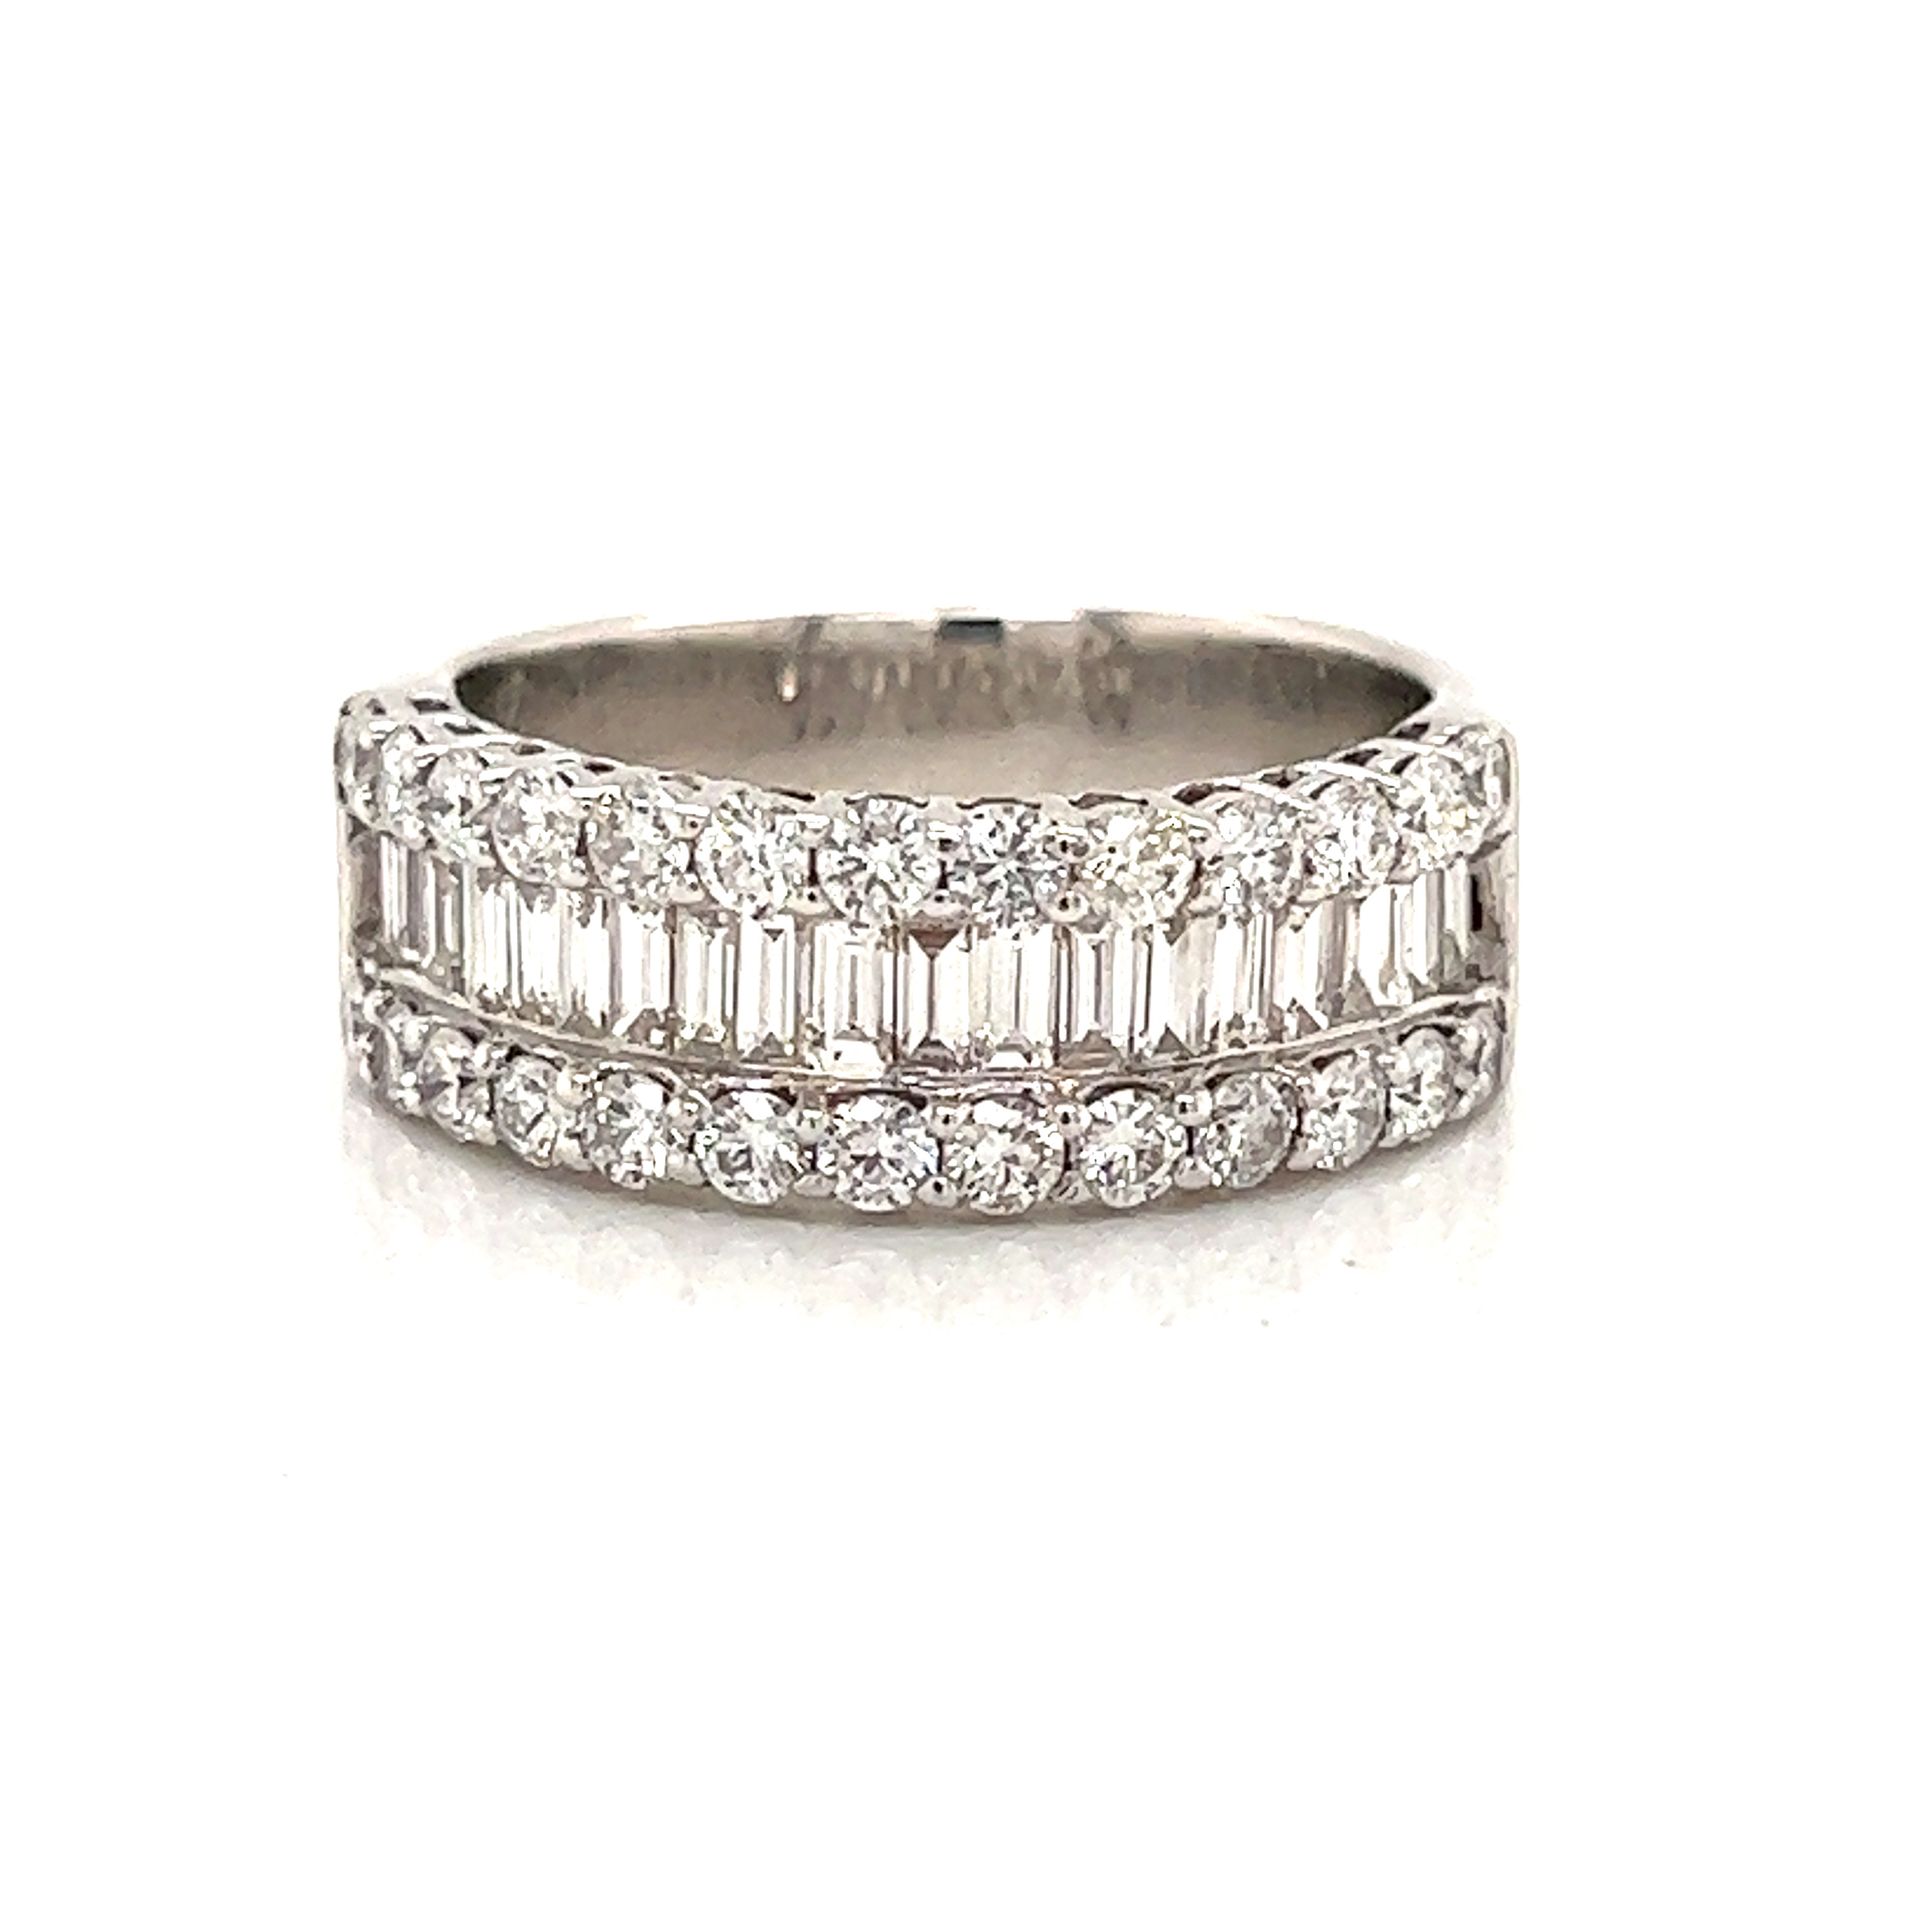 14k Half Eternity Diamond Ring 14K白金重量5.2克半永恒钻石约2克拉戒指尺寸6.25尺寸0.26 "x0.78"